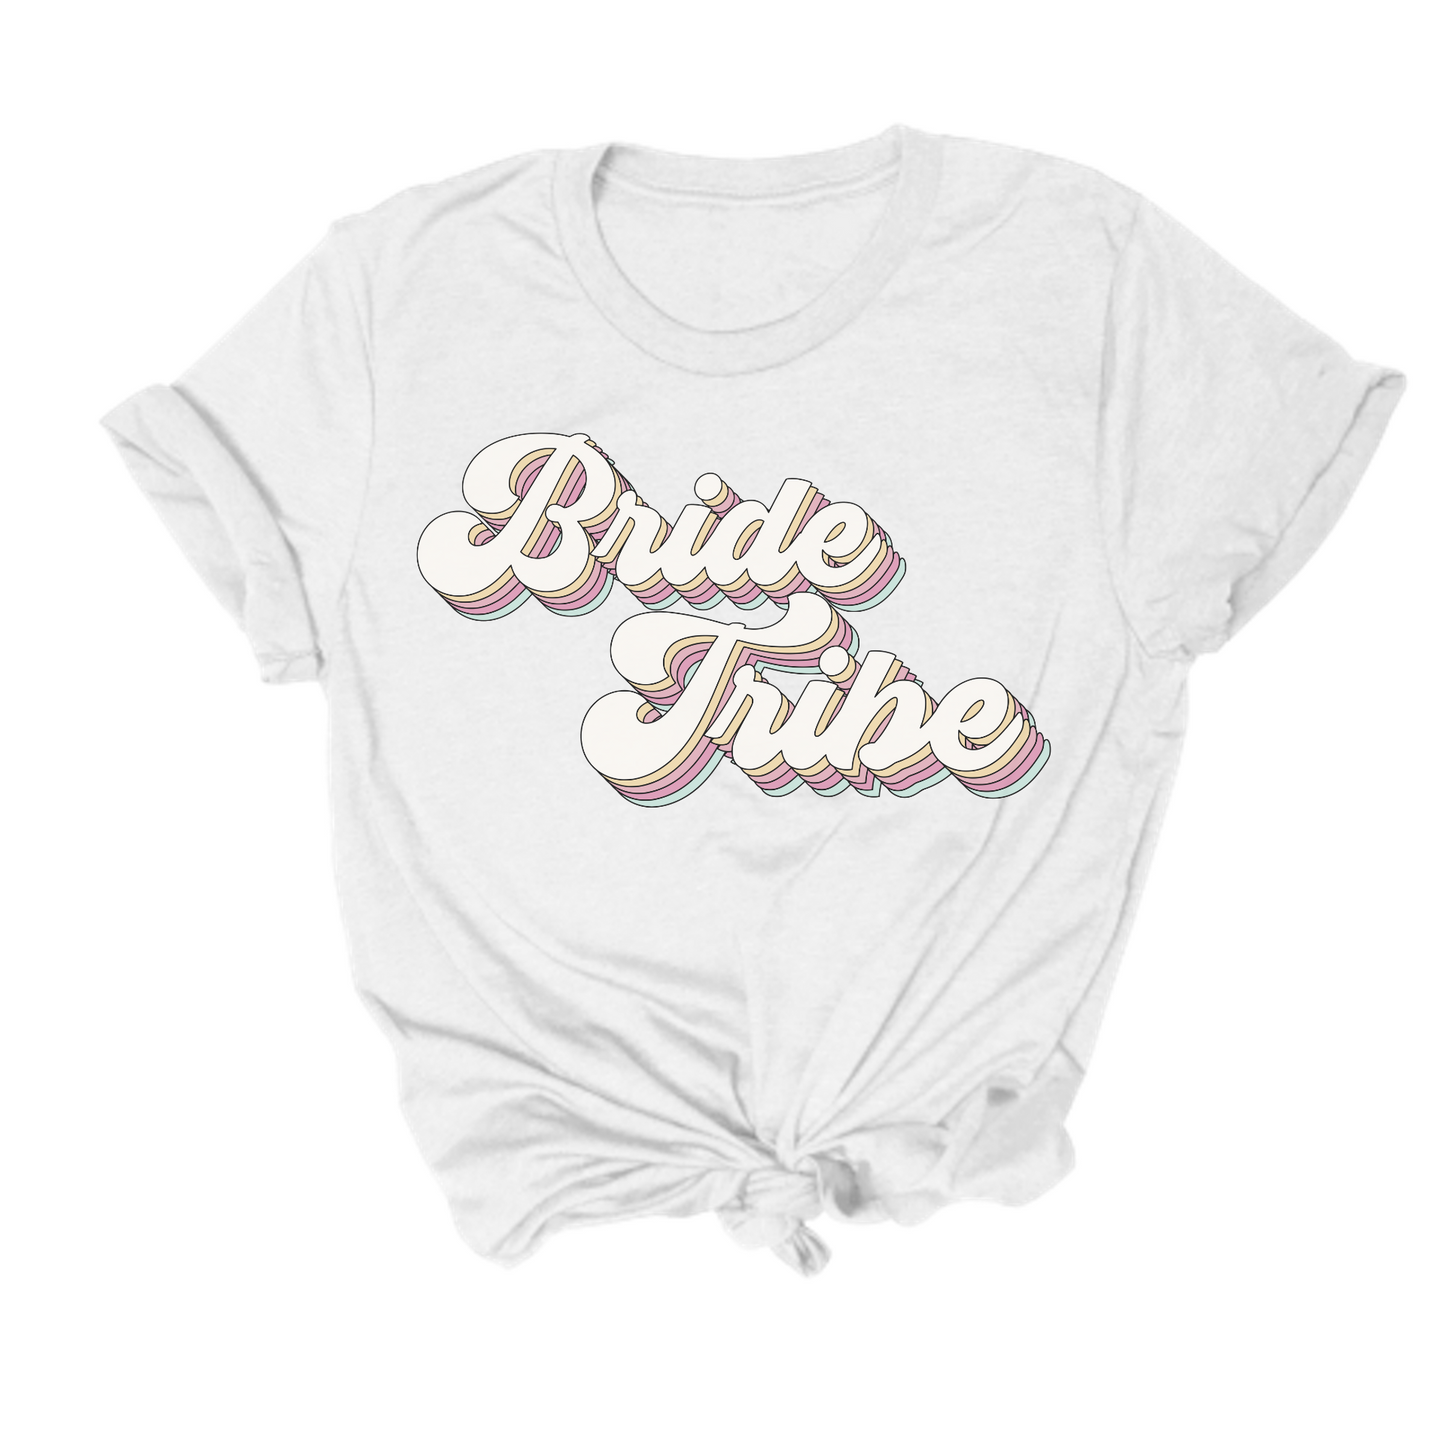 Retro Bride Tribe Tee